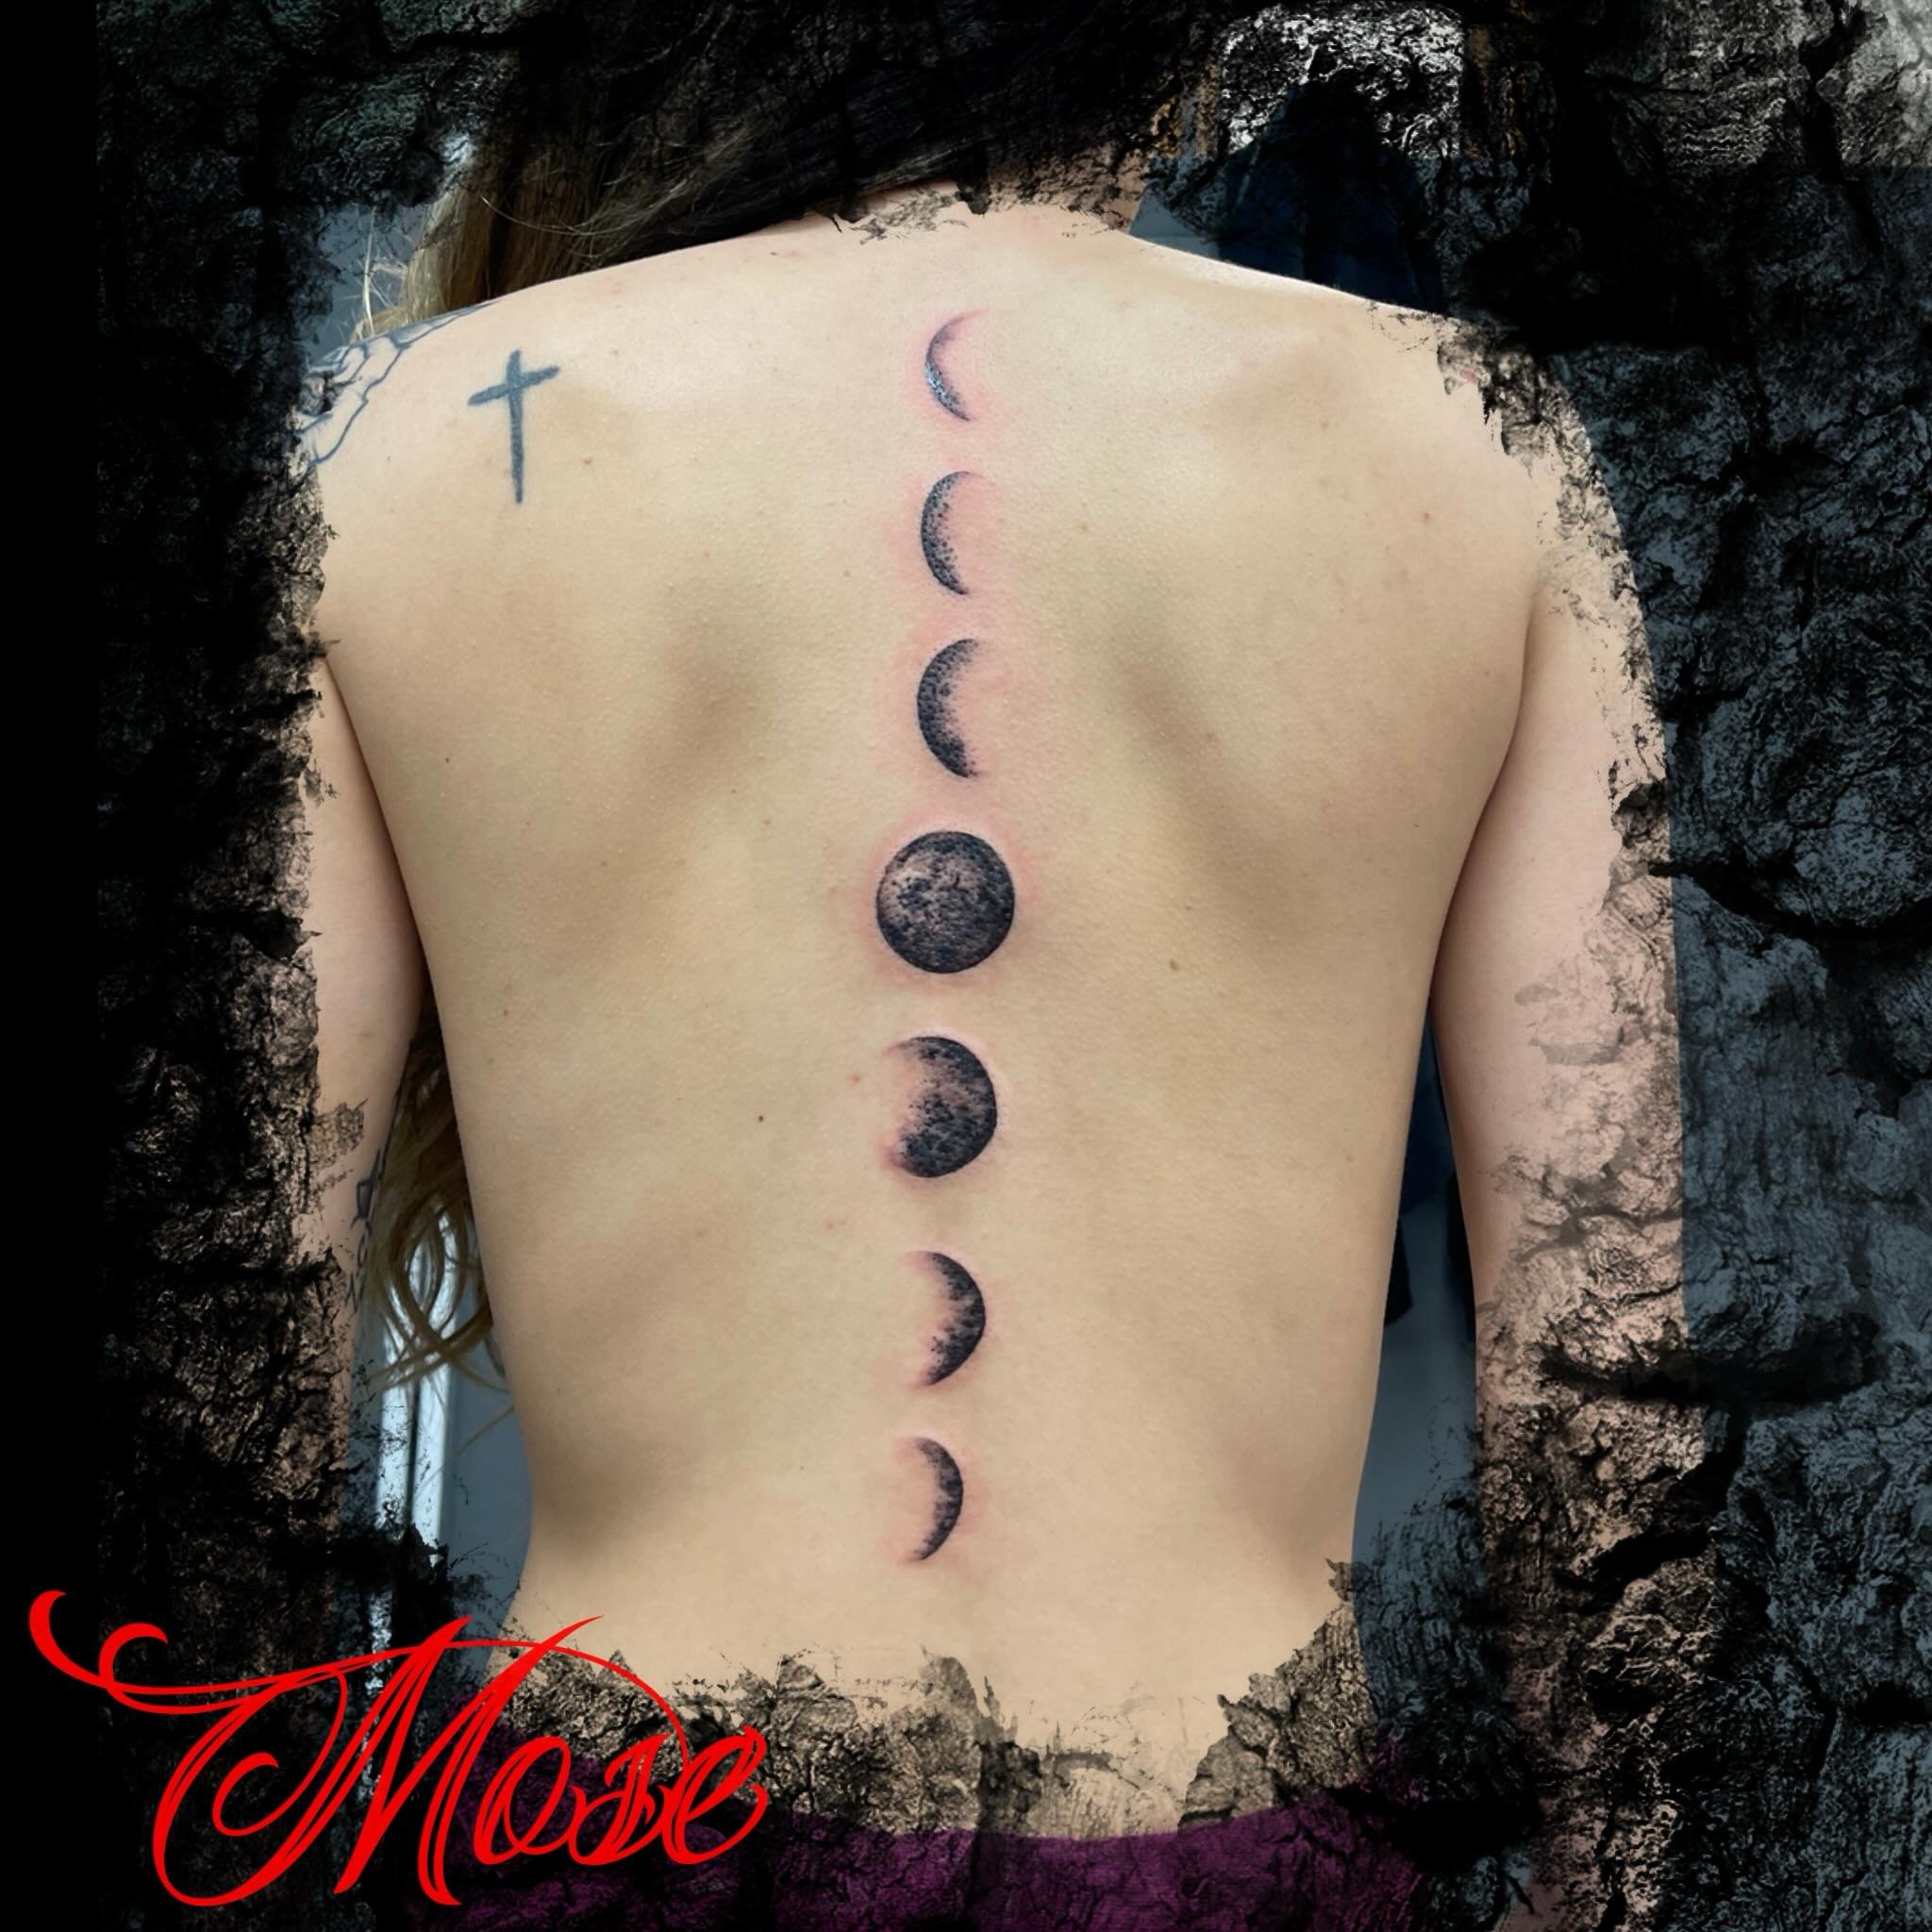 Shoot for the moon #tattoo #tattooartist #lasvegas #lasvegastattooartist #criticaltattoosupply #dynamiccolor #girlswithtattoos #tattooart #tattoos #tattoolife #tattooedgirls #guyswithtattoos #inked #tattooed #bodyart #art #eternalink #tattooist #tatt